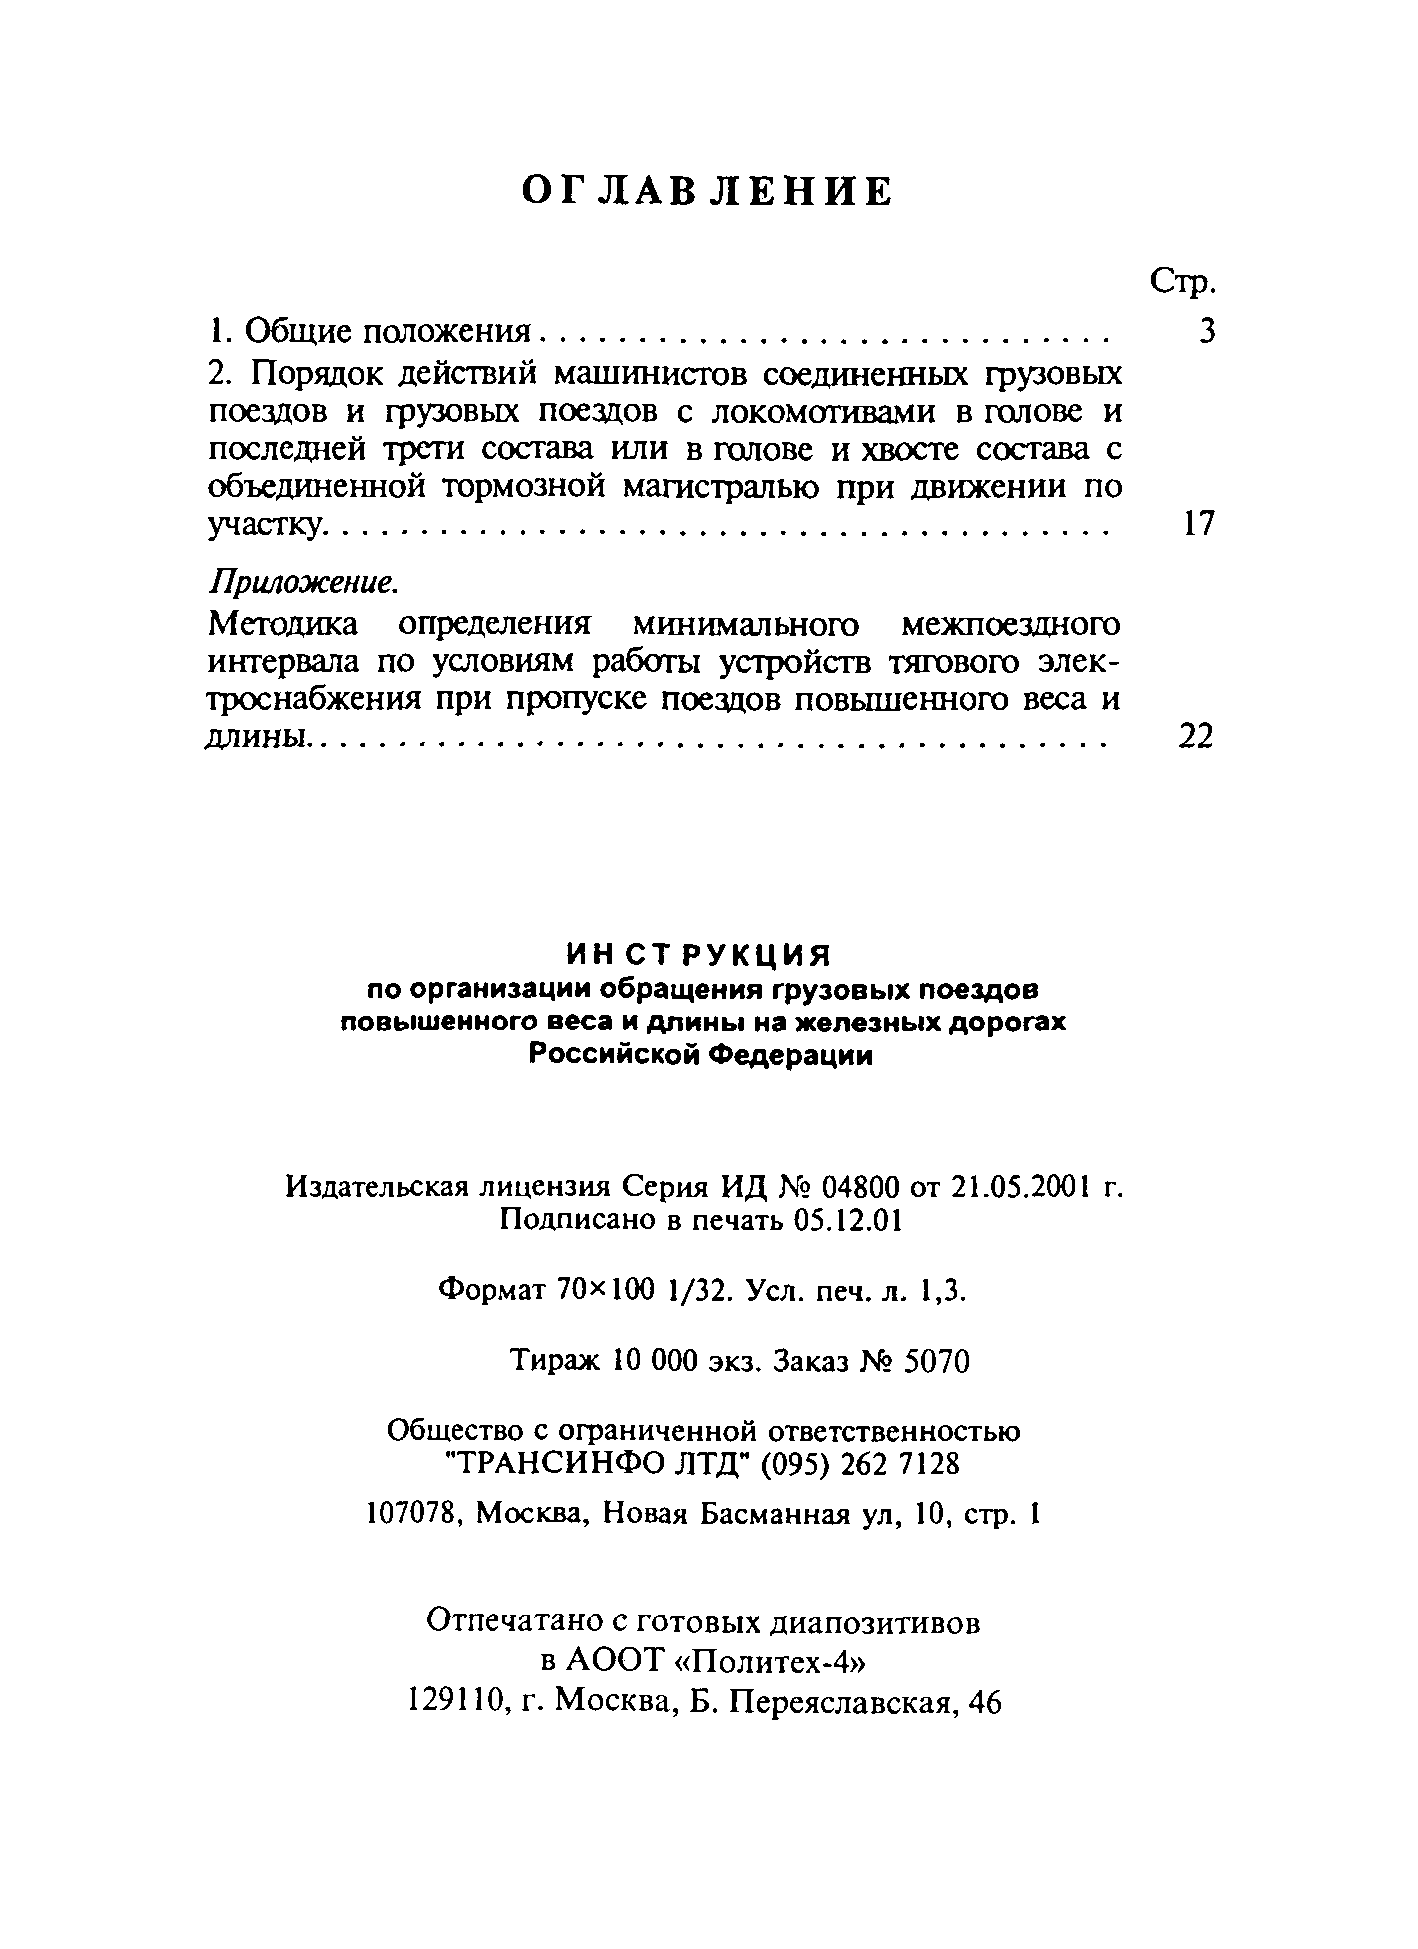 Инструкция ЦД-ЦТ-851